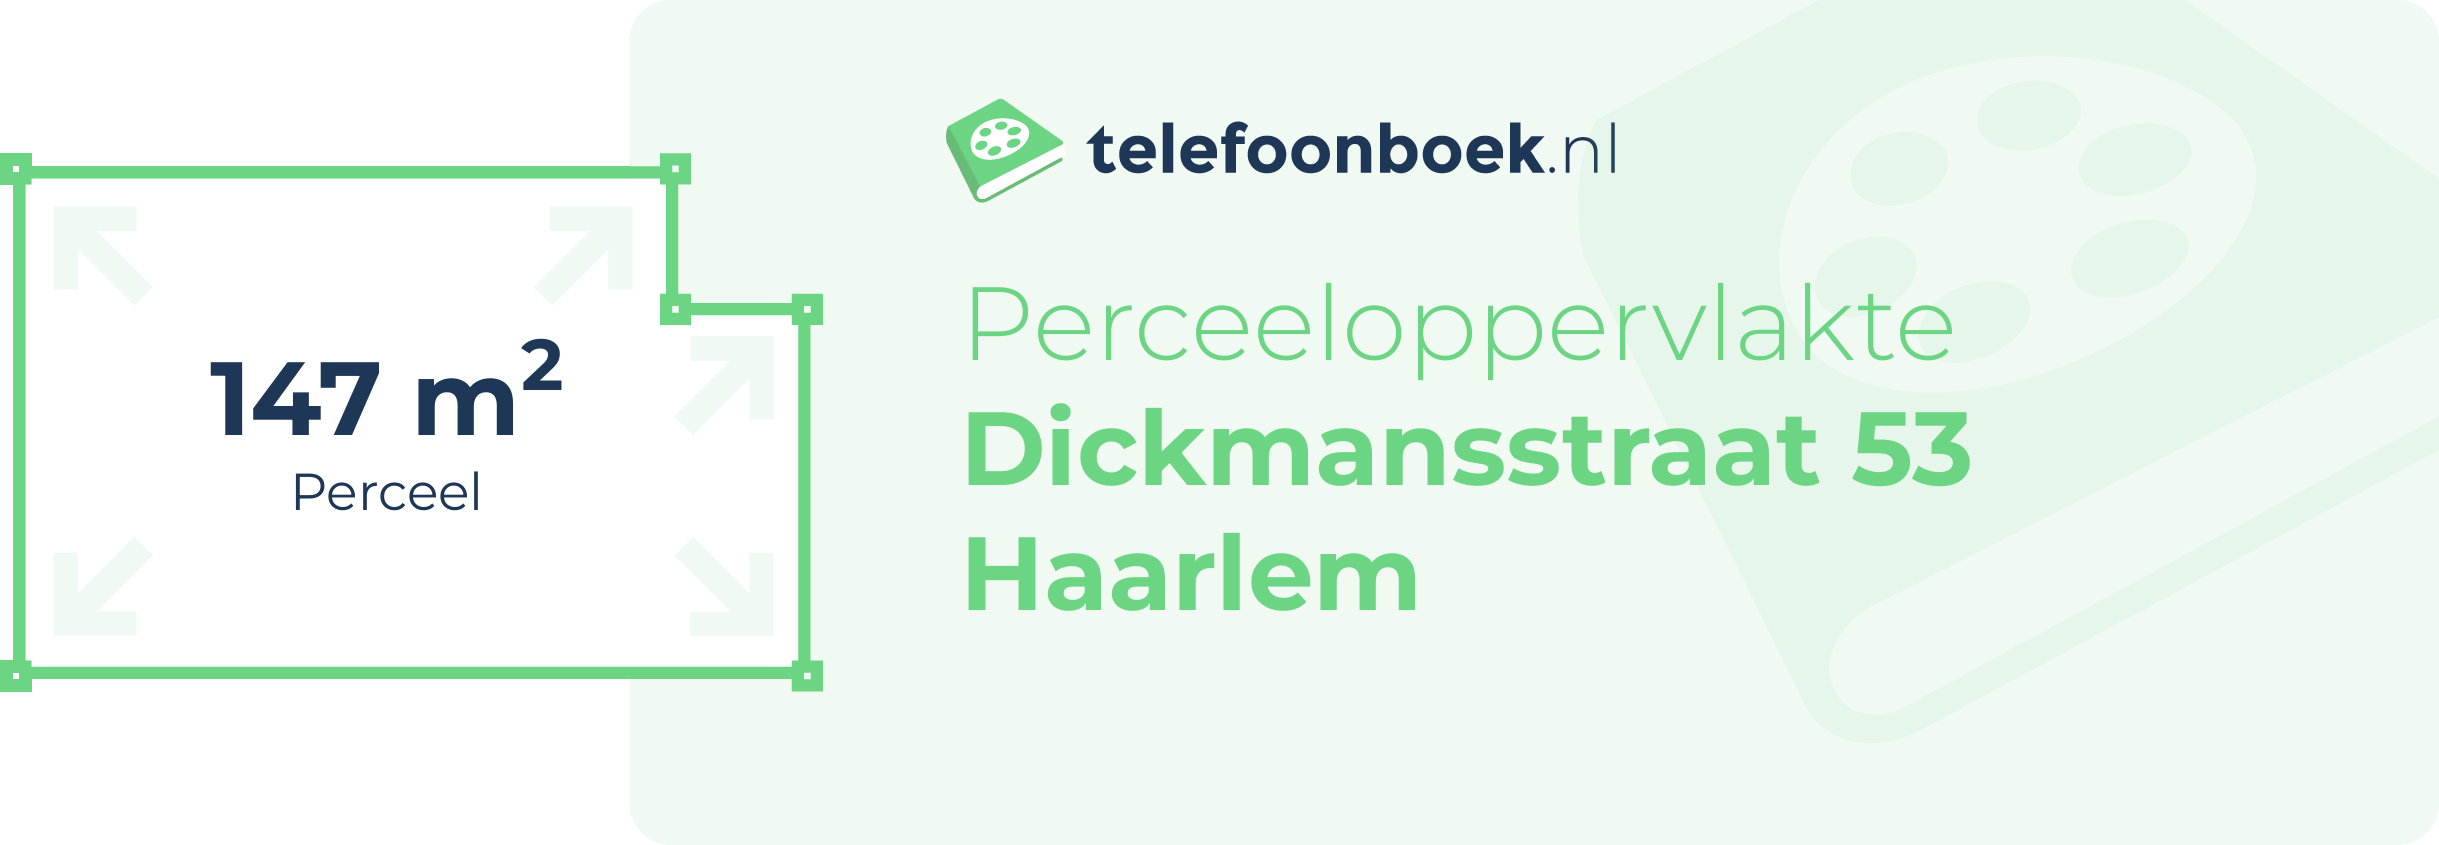 Perceeloppervlakte Dickmansstraat 53 Haarlem